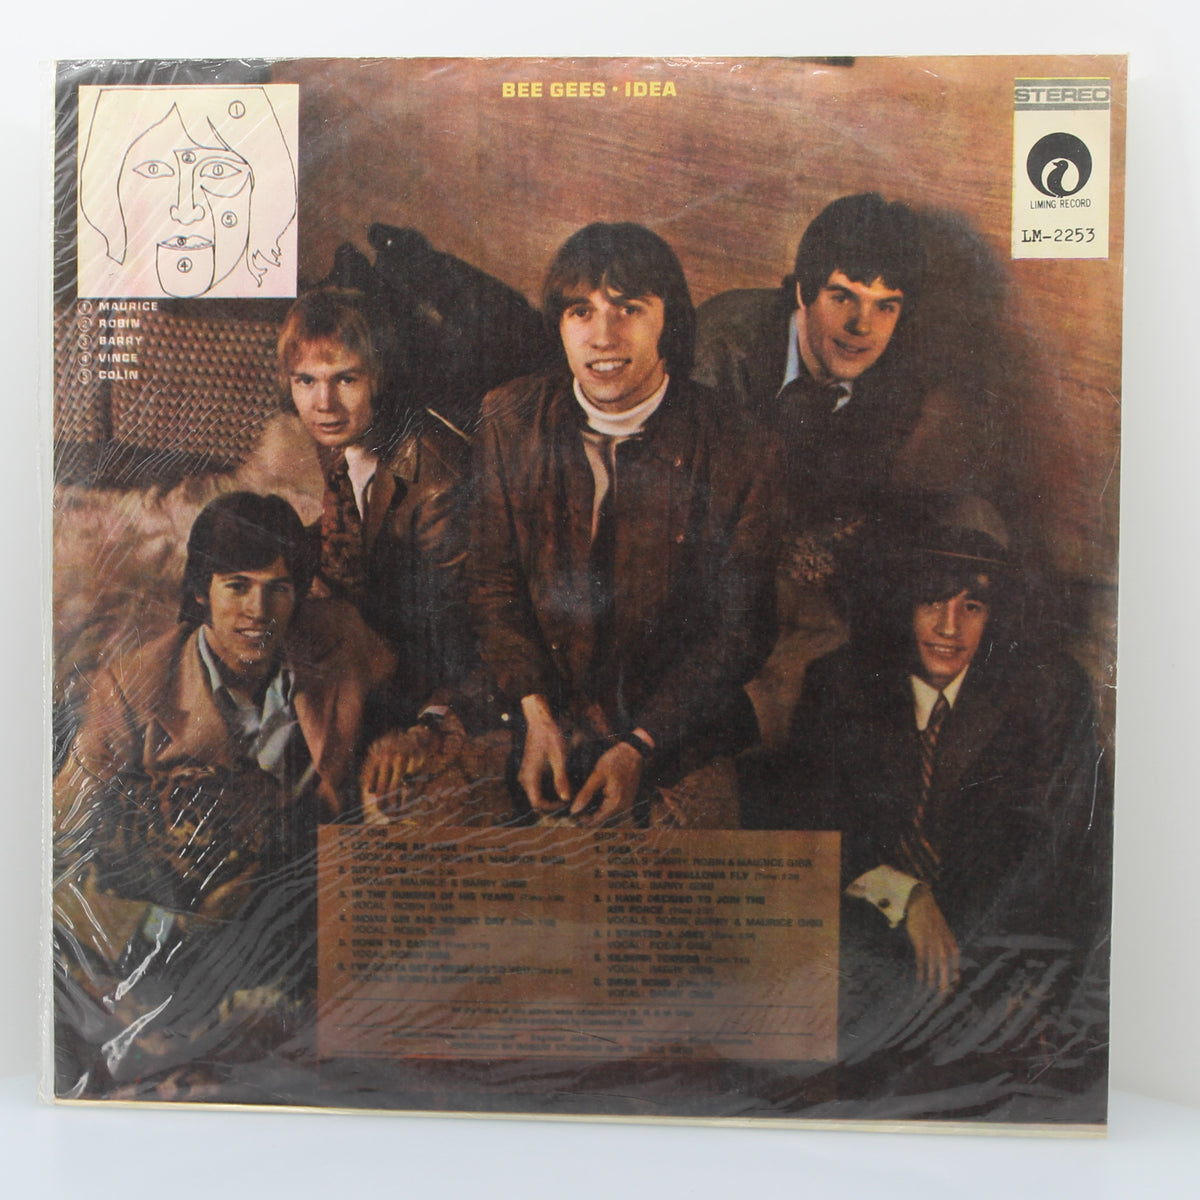 Bee Gees - Idea, Vinyl, LP 33Rpm, Album, Unofficial Release, Mono, Taiwan 1969